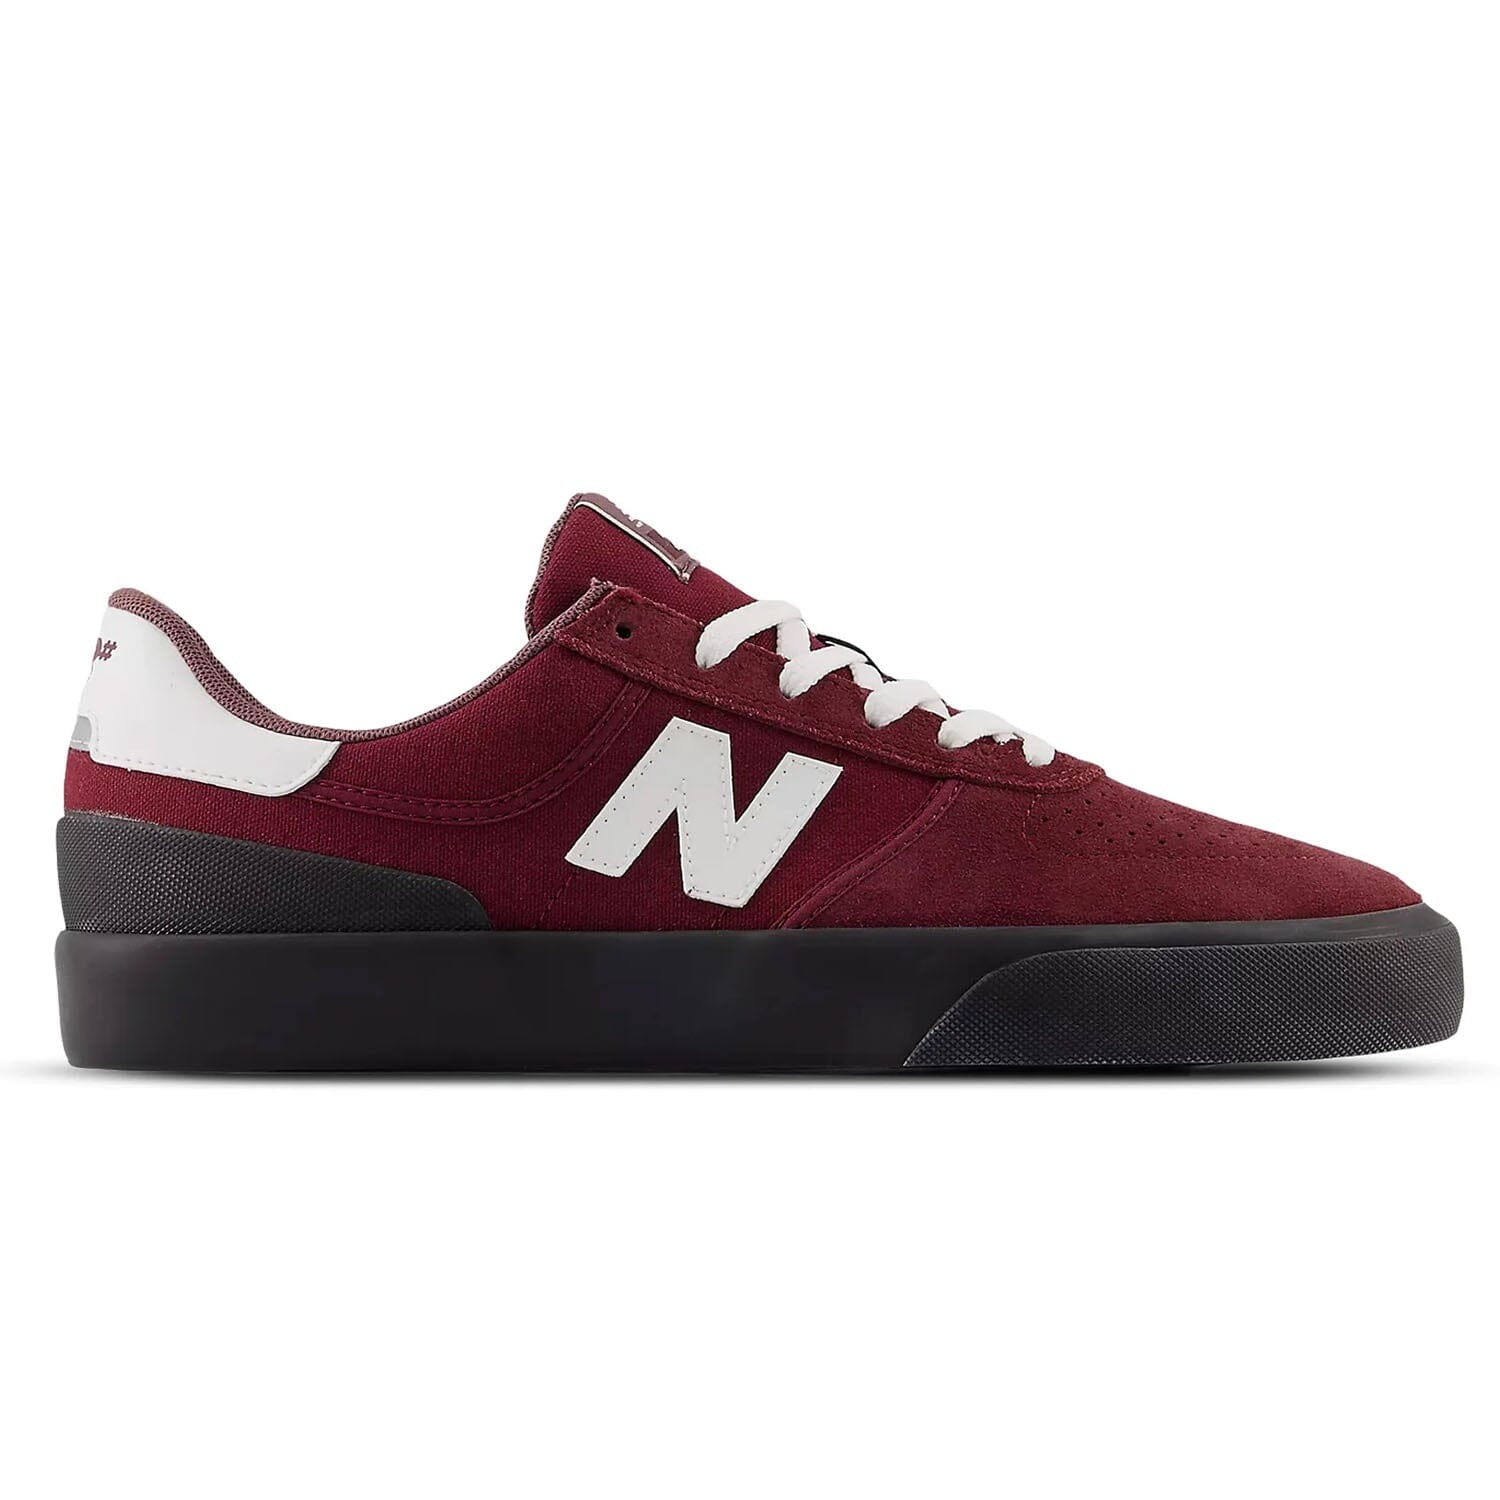 New Balance Numeric NM272 Burgundy/White/Black footwear New Balance Numeric 